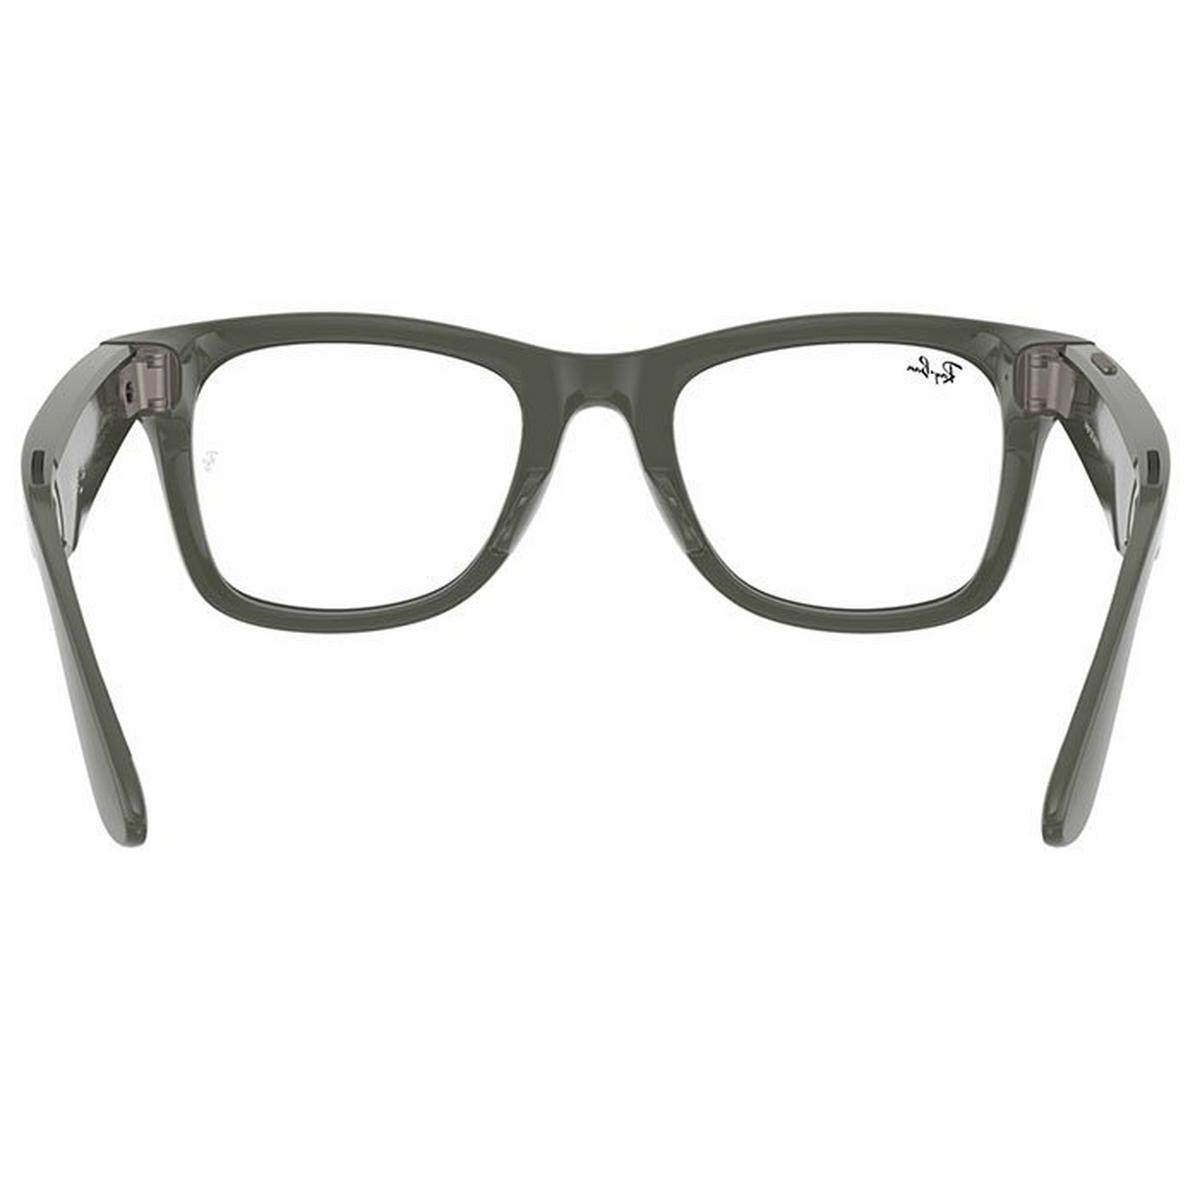 Stories Wayfarer Smart Glasses